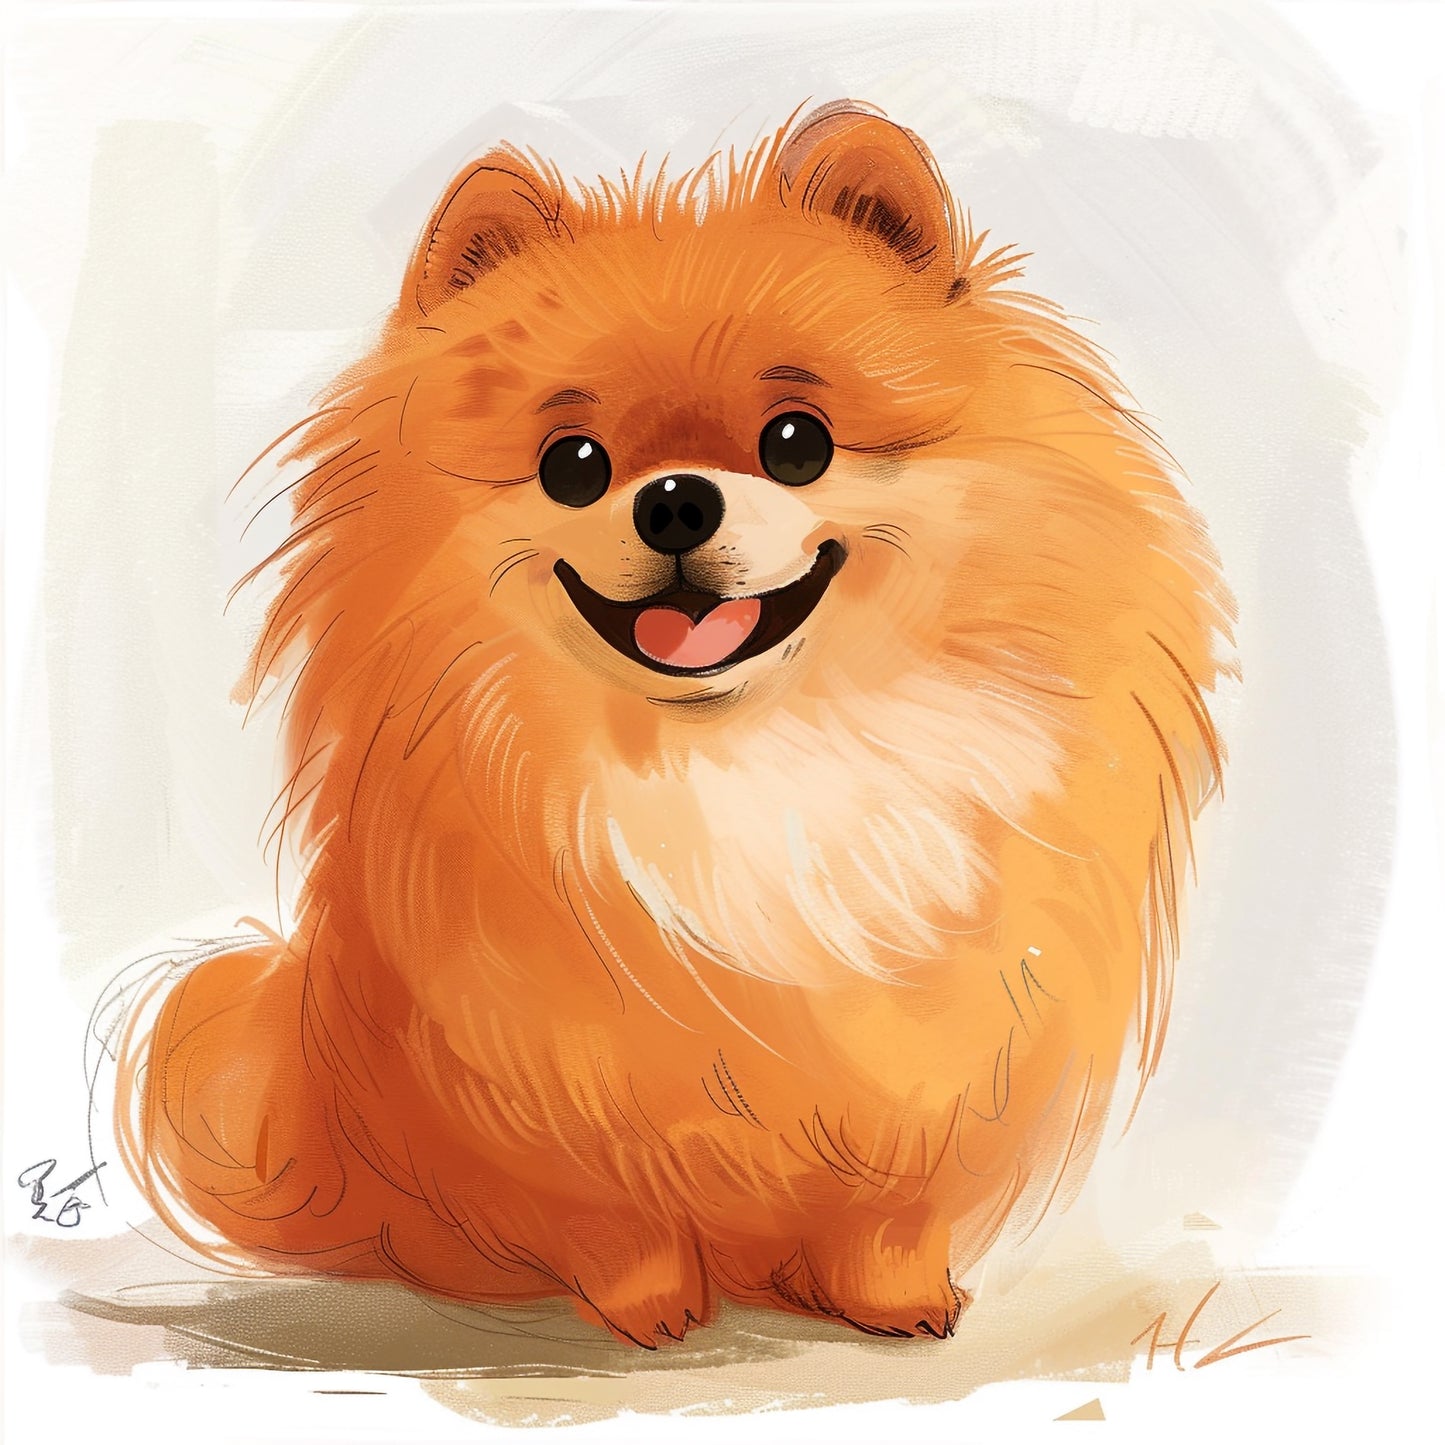 Adorable Pomeranian Dog Smiling Joyfully in Illustration